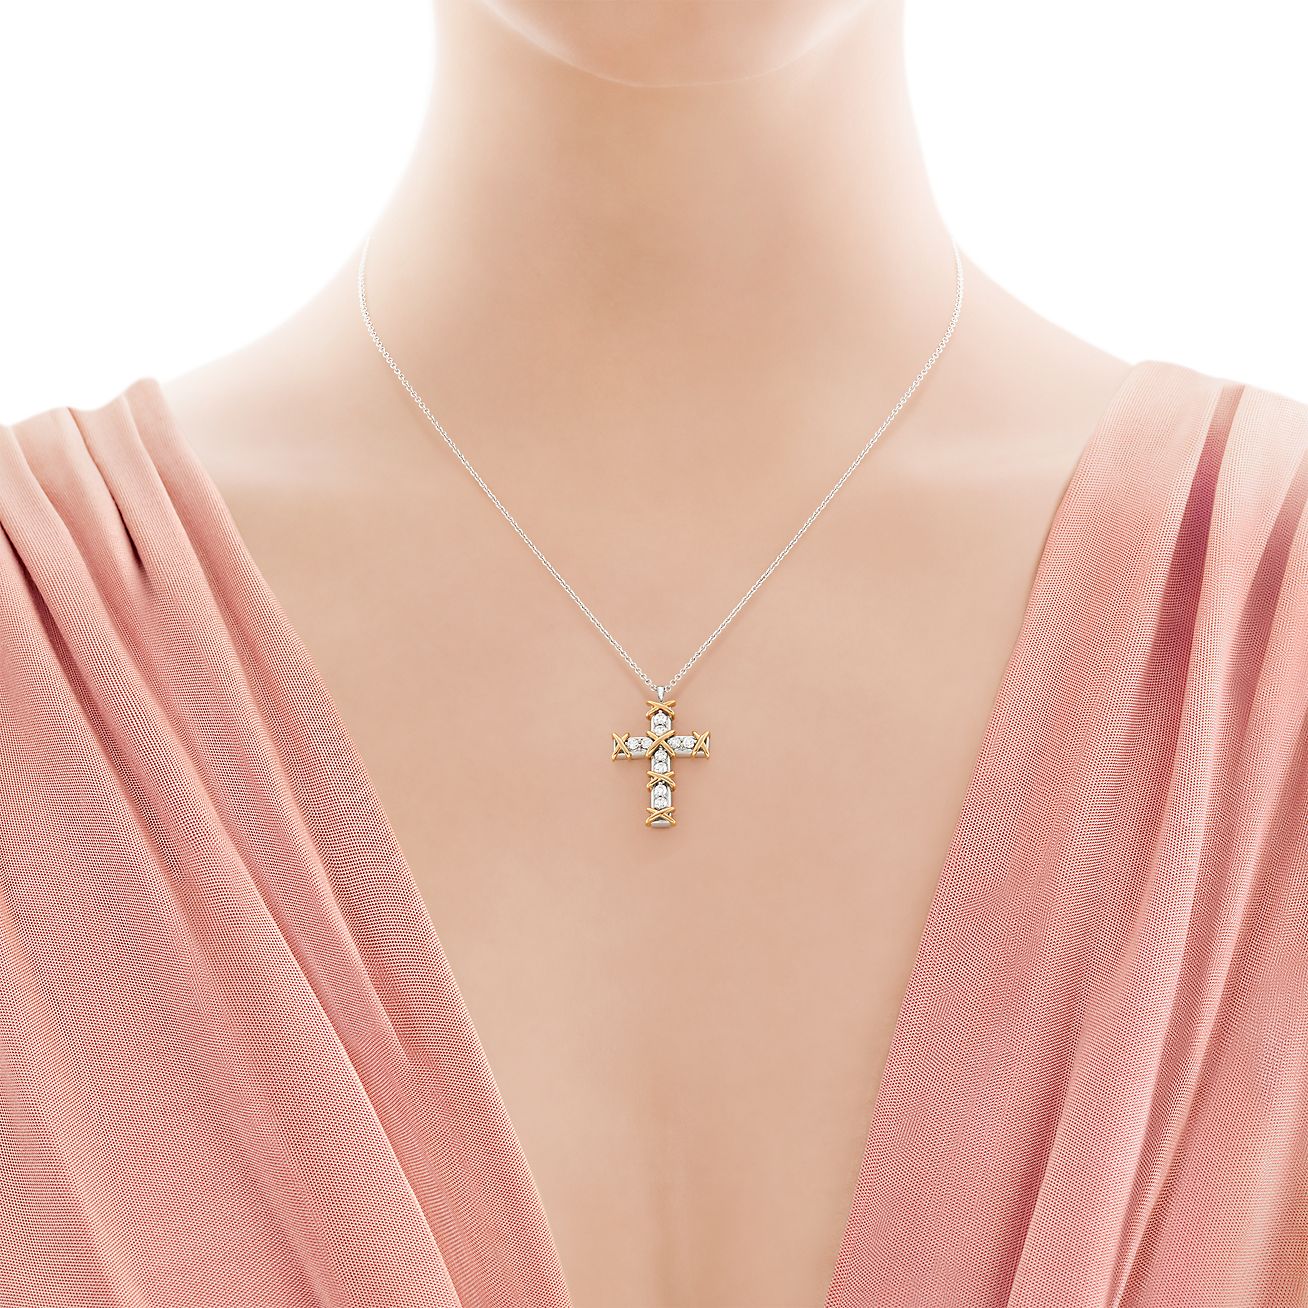 tiffanys cross necklace